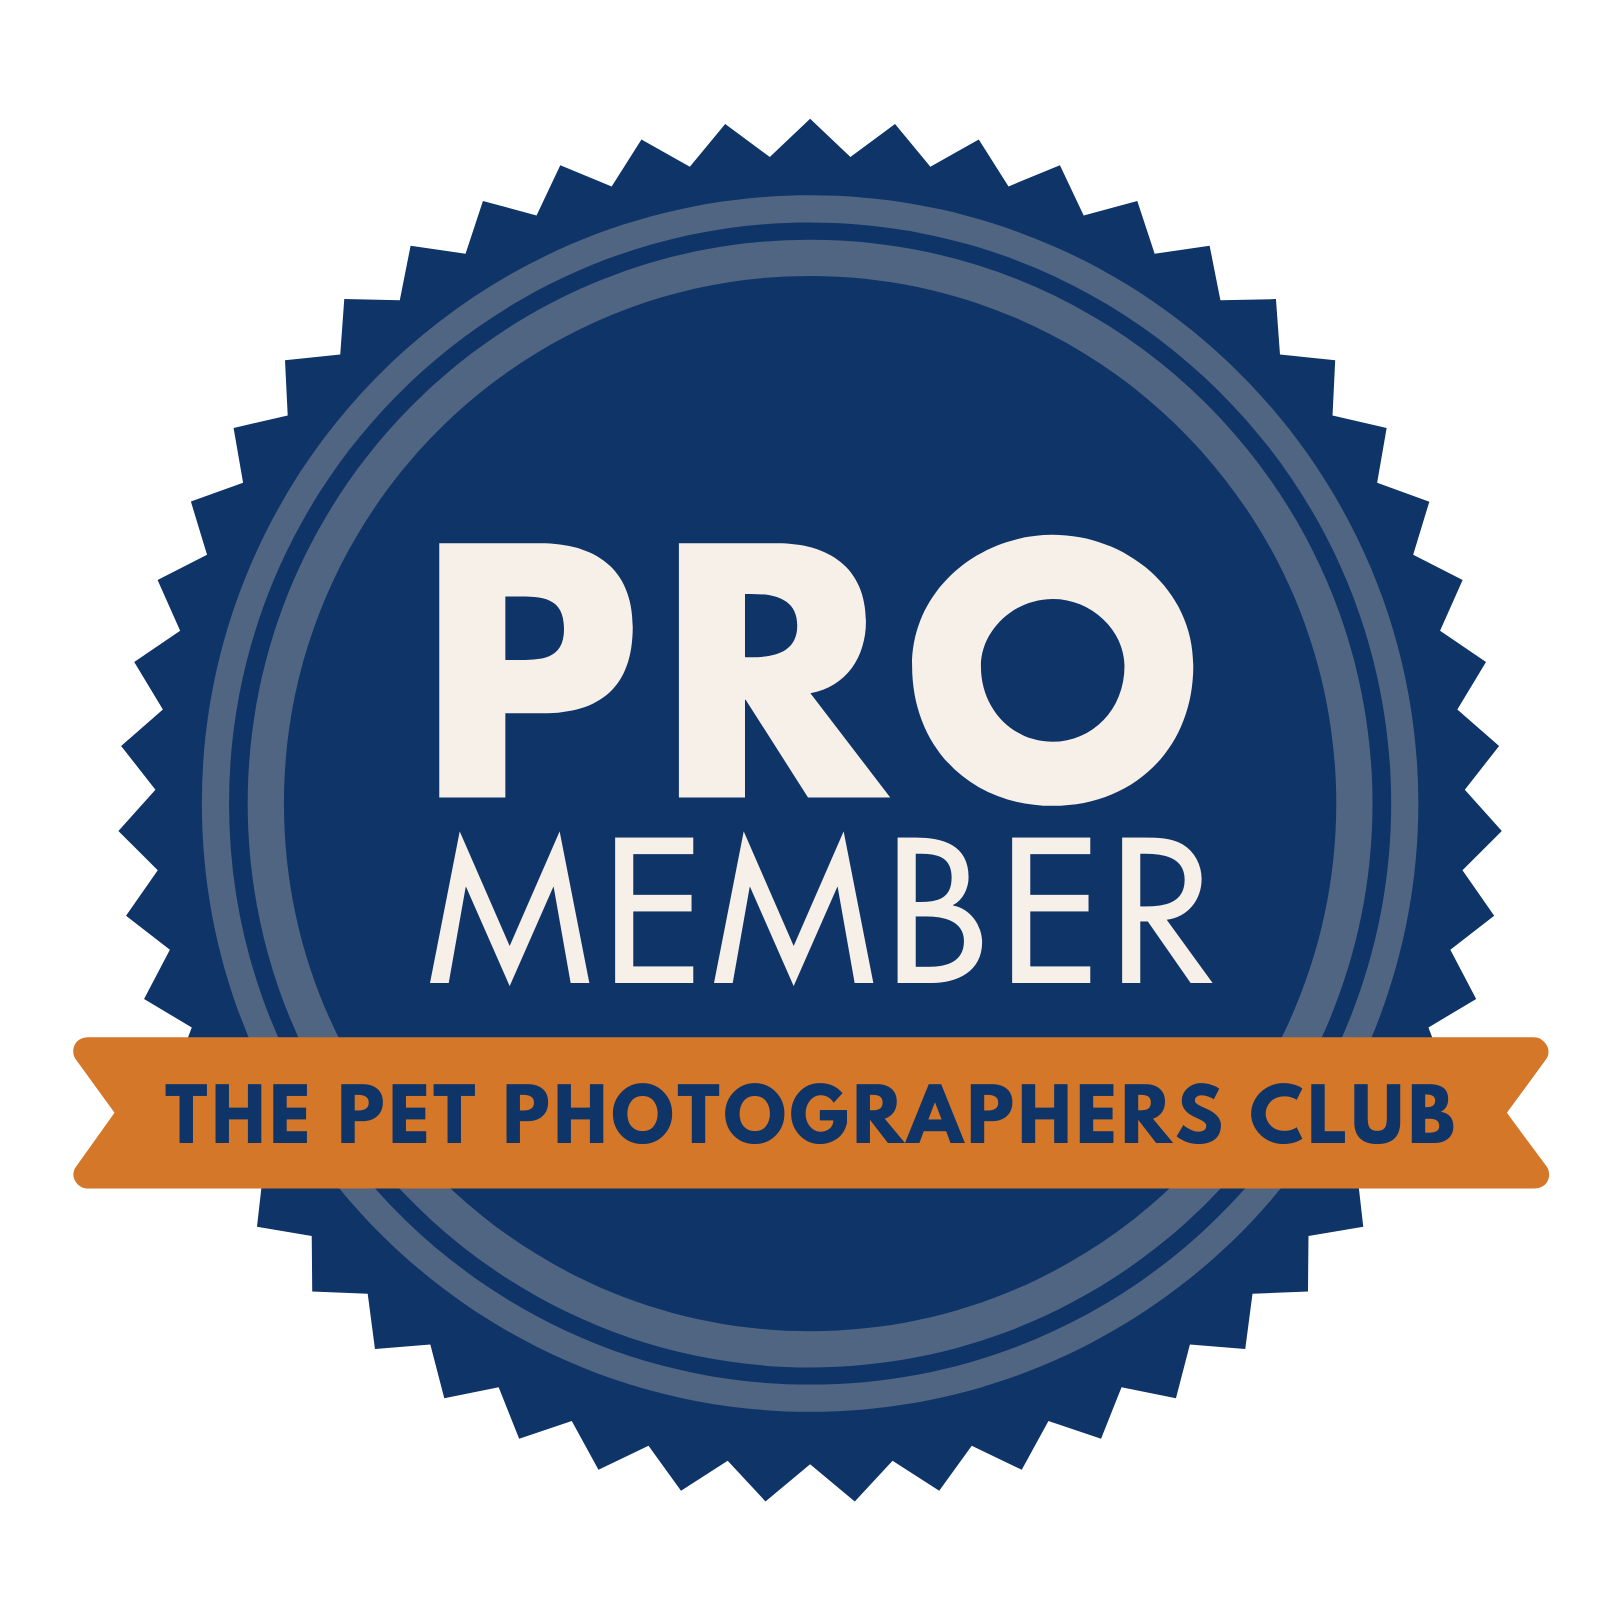 The Pet Photographers club membership logo